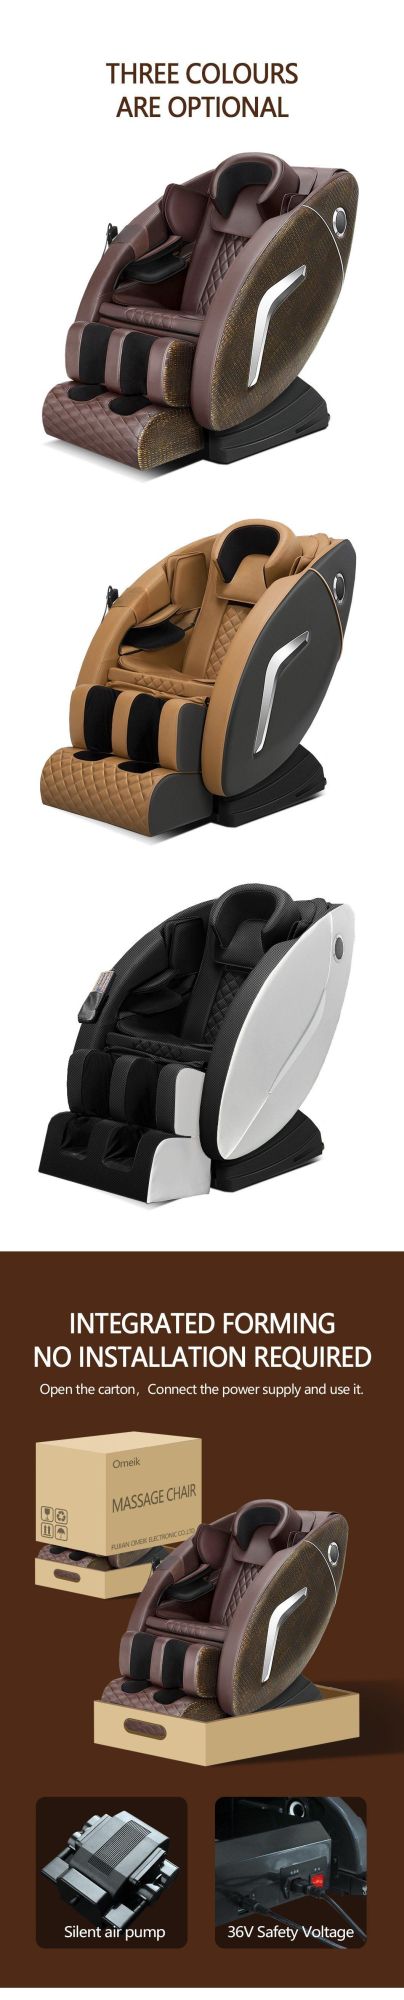 L Shape Track Music 3D Full Body Shiatsu Game Massage Chair